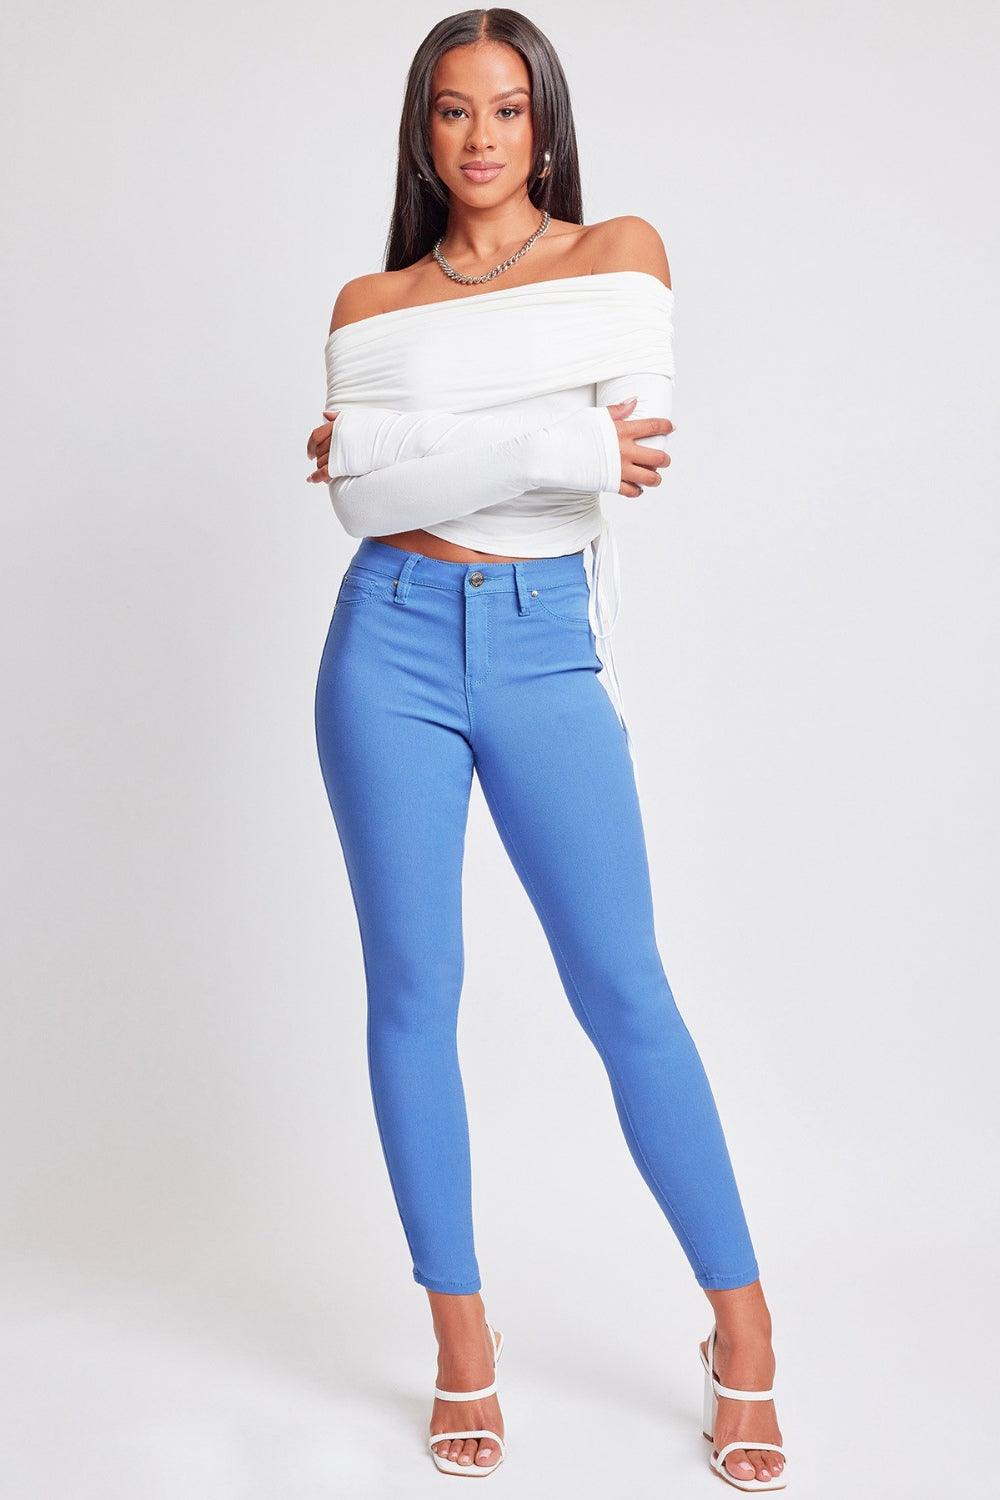 YMI Jeanswear Hyper Stretch Mid-Rise Skinny Pants - Jessiz Boutique